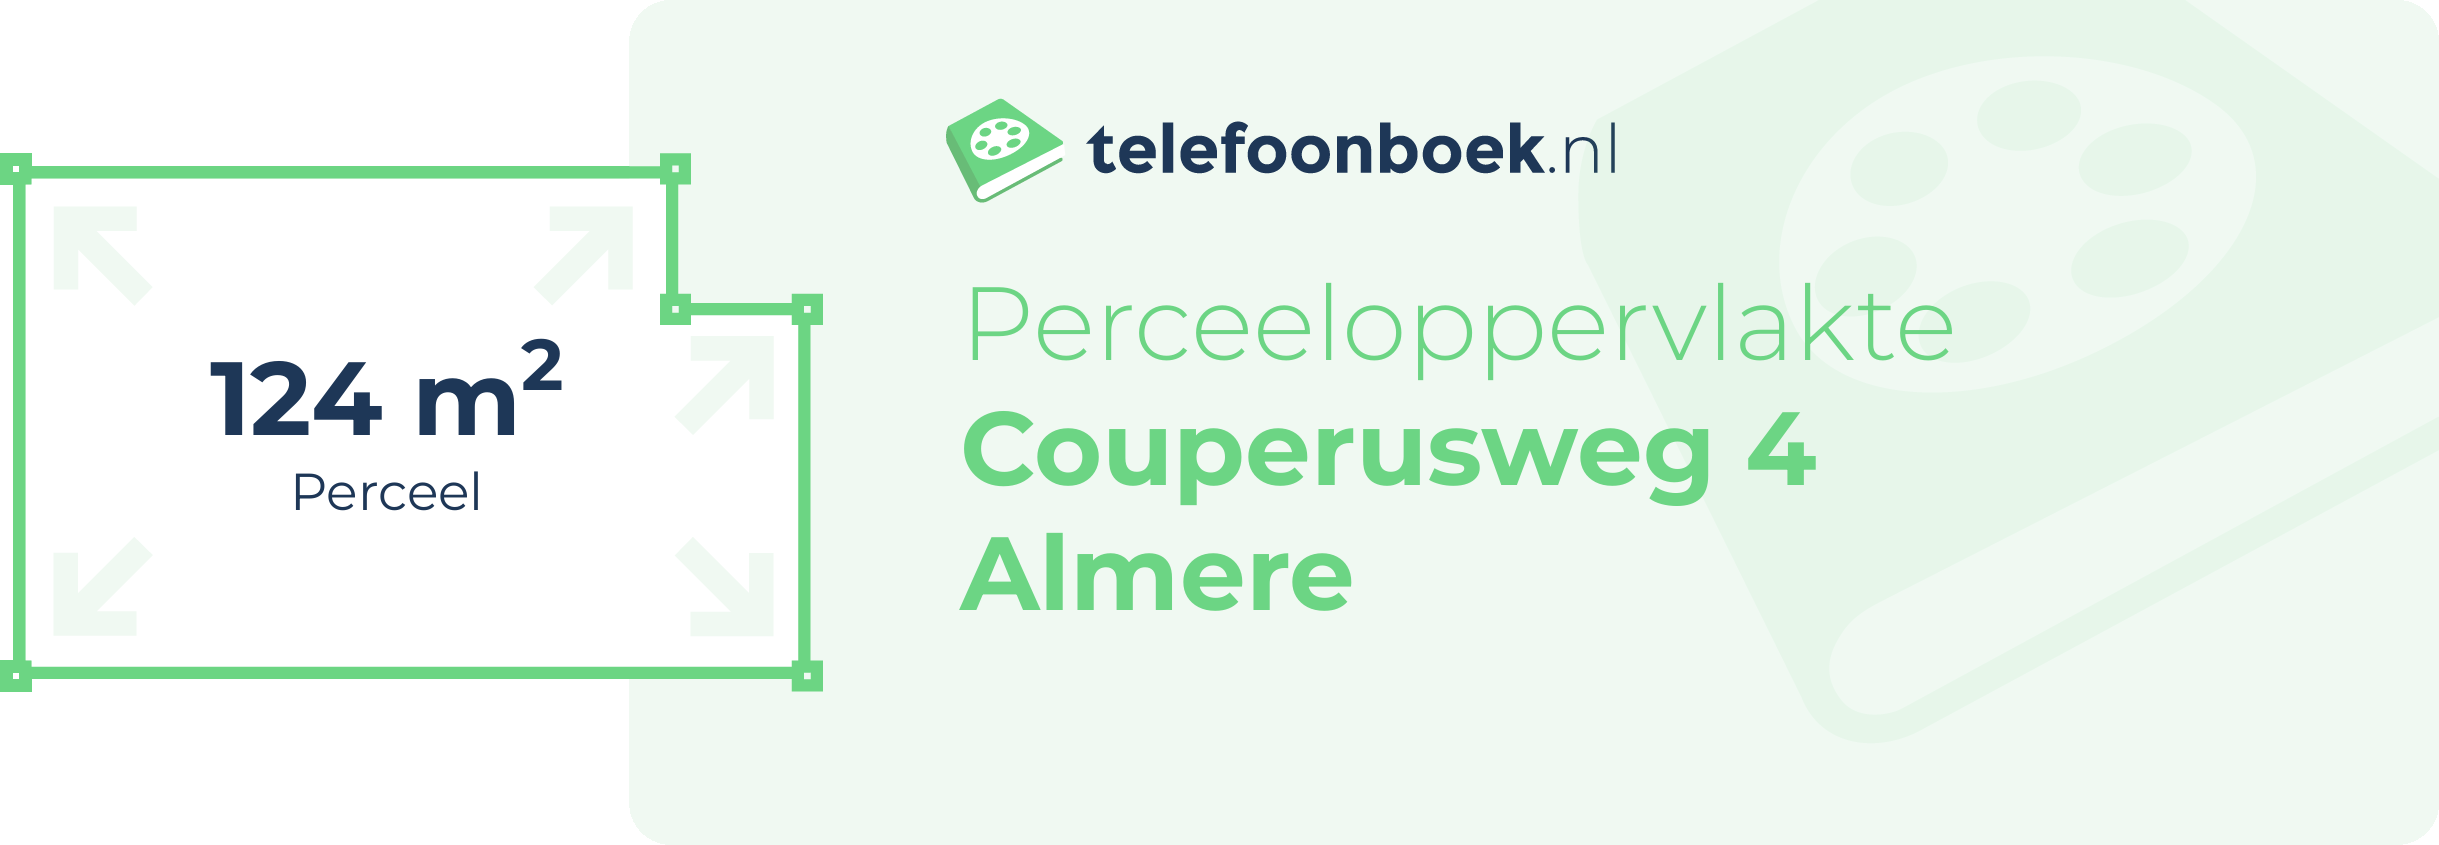 Perceeloppervlakte Couperusweg 4 Almere